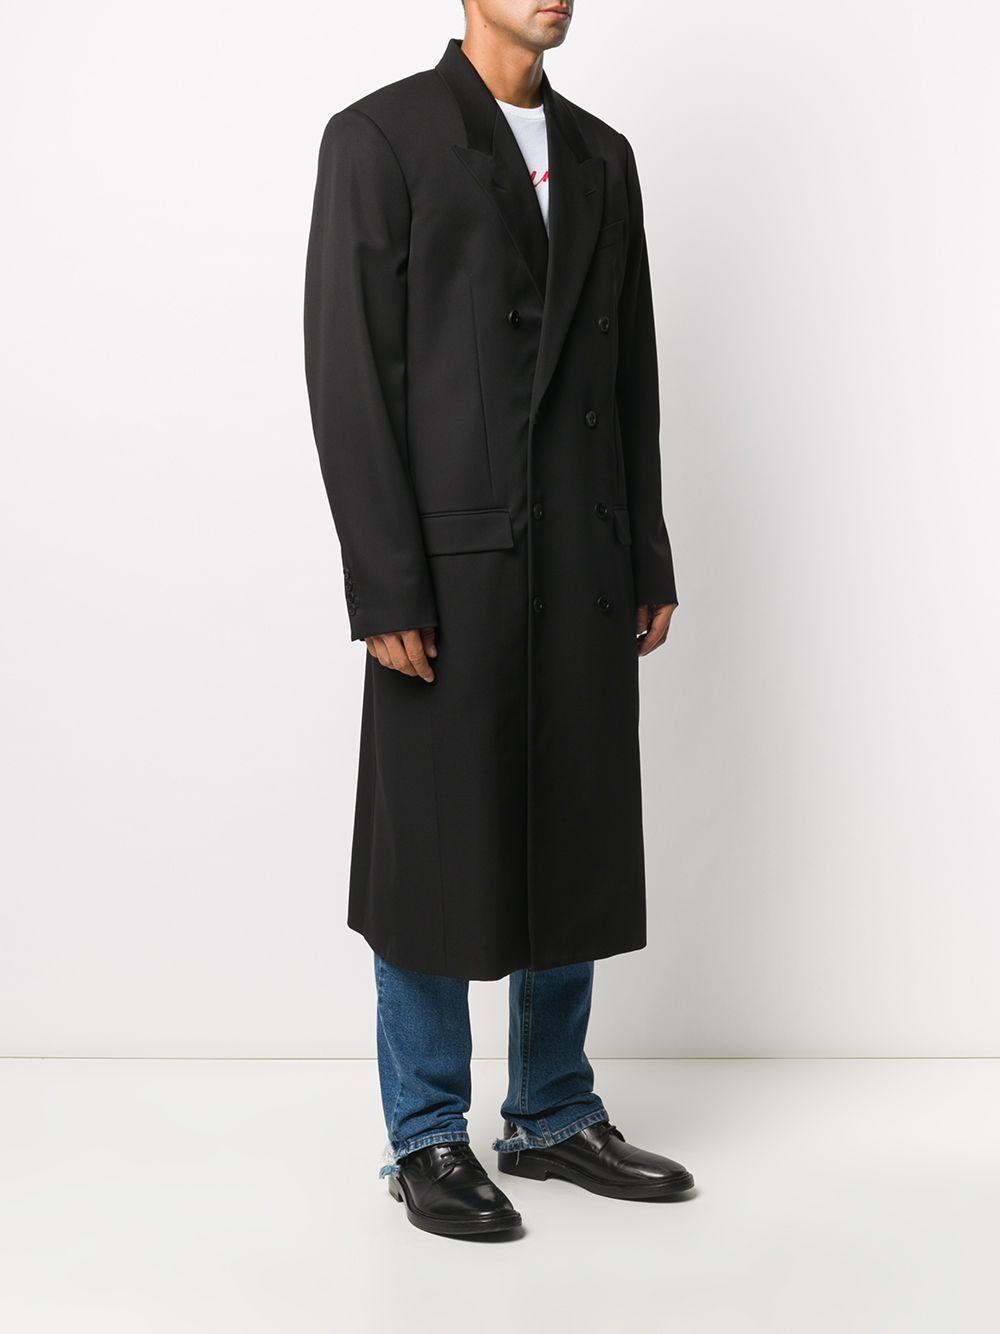 Balenciaga Logo Coat in Black for Men | Lyst